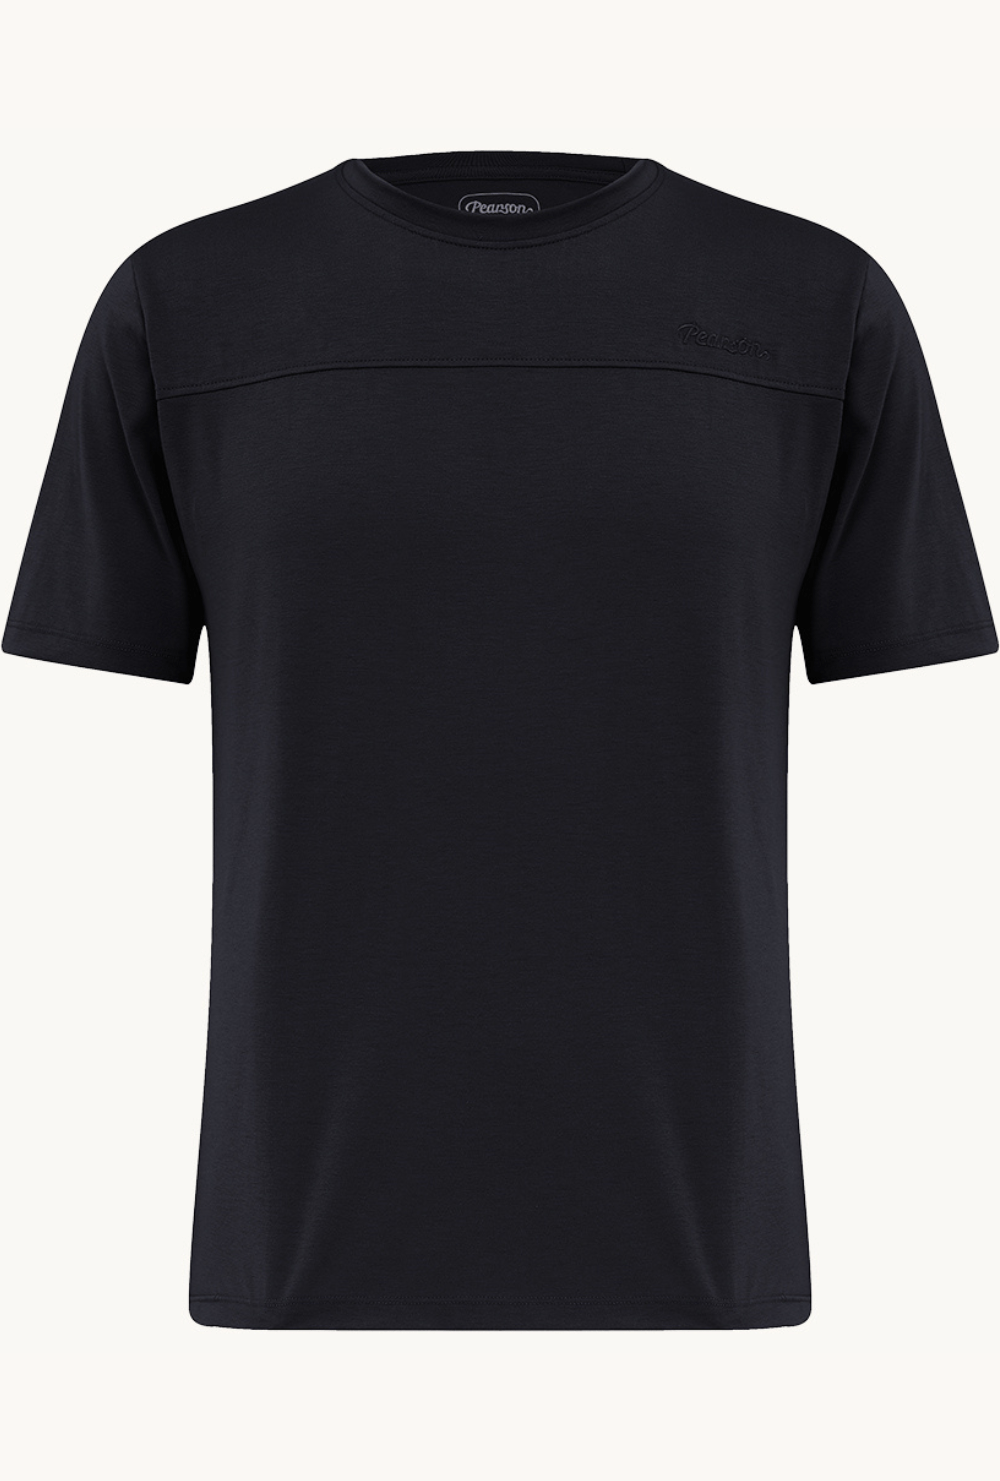 Pearson 1860  High DaysandHolidays - Cycling T-shirt  Black / Large